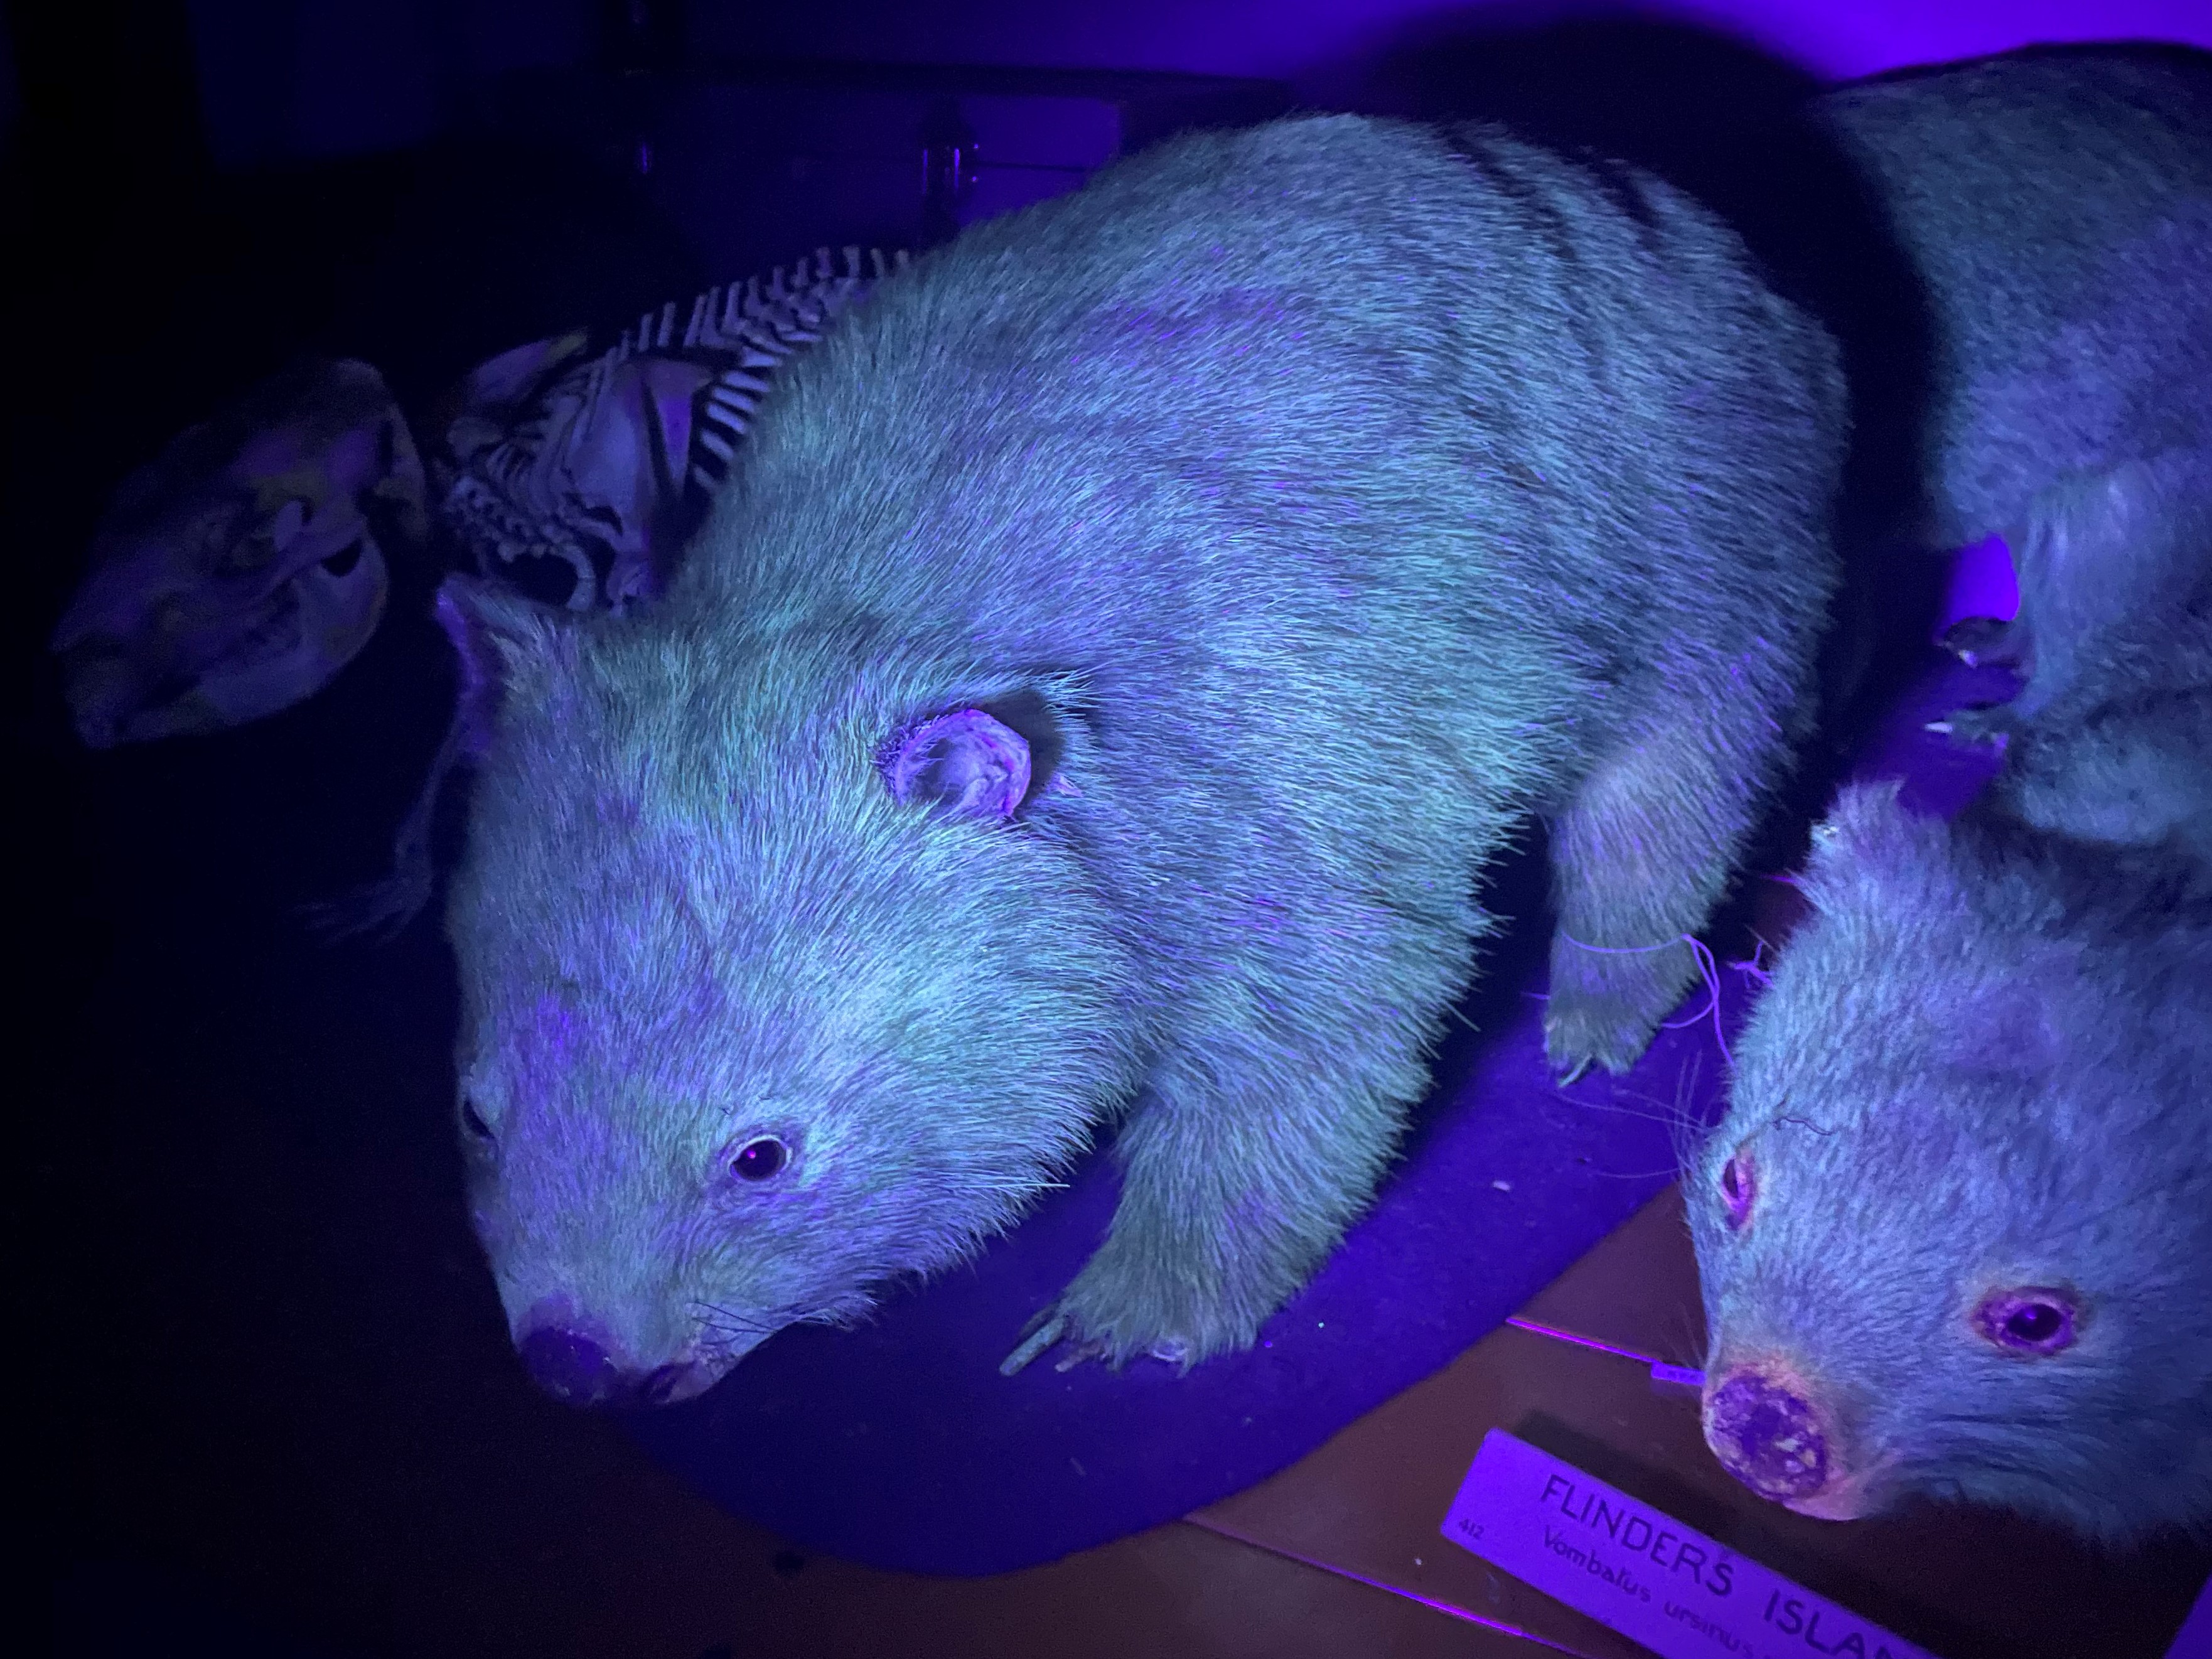 More that 125 mammal species glow under UV light